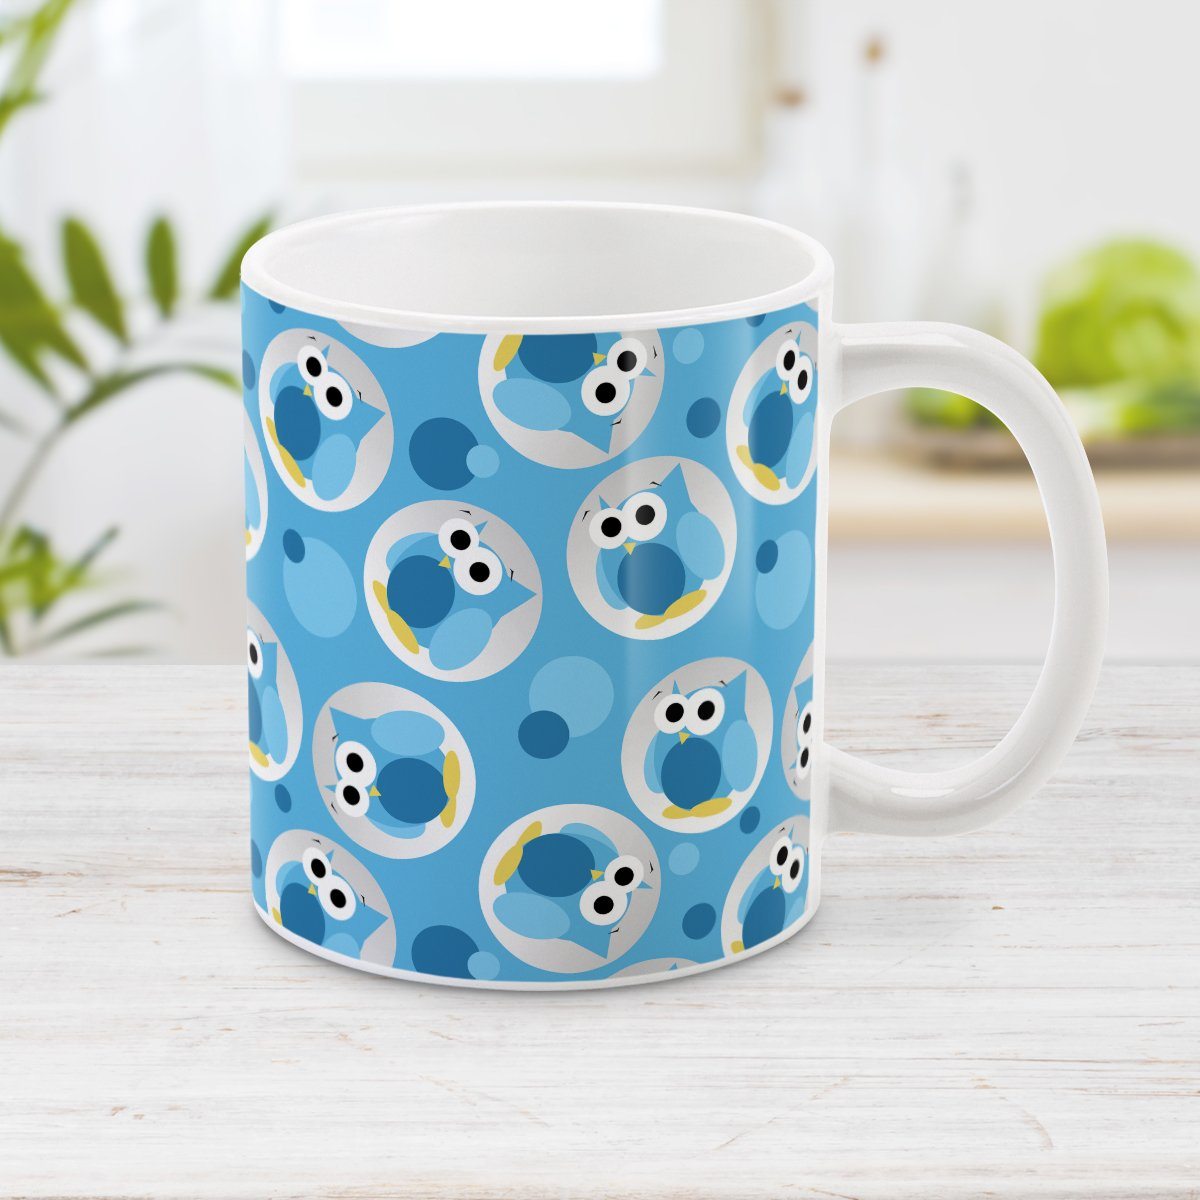 Blue Owl Mug - Funny Cute Blue Owl Pattern Mug at Amy's Coffee Mugs